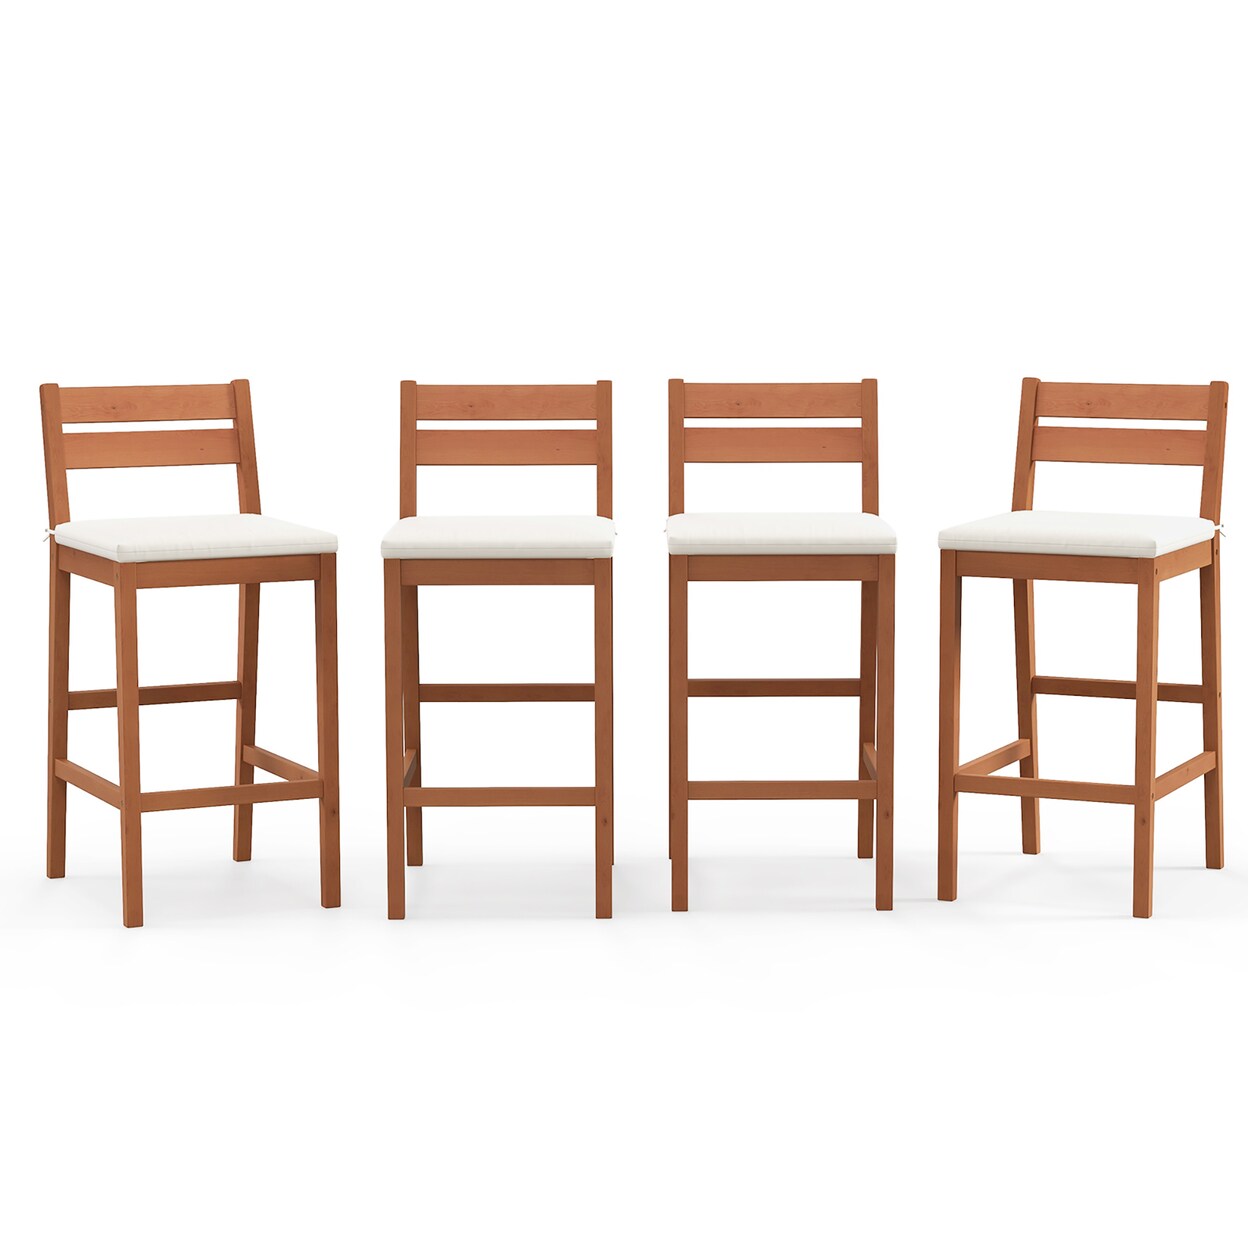 Gymax Patio Eucalyptus Wood Bar Stools Set of 4 Outdoor Bar Height Patio Chairs w/ Cushions